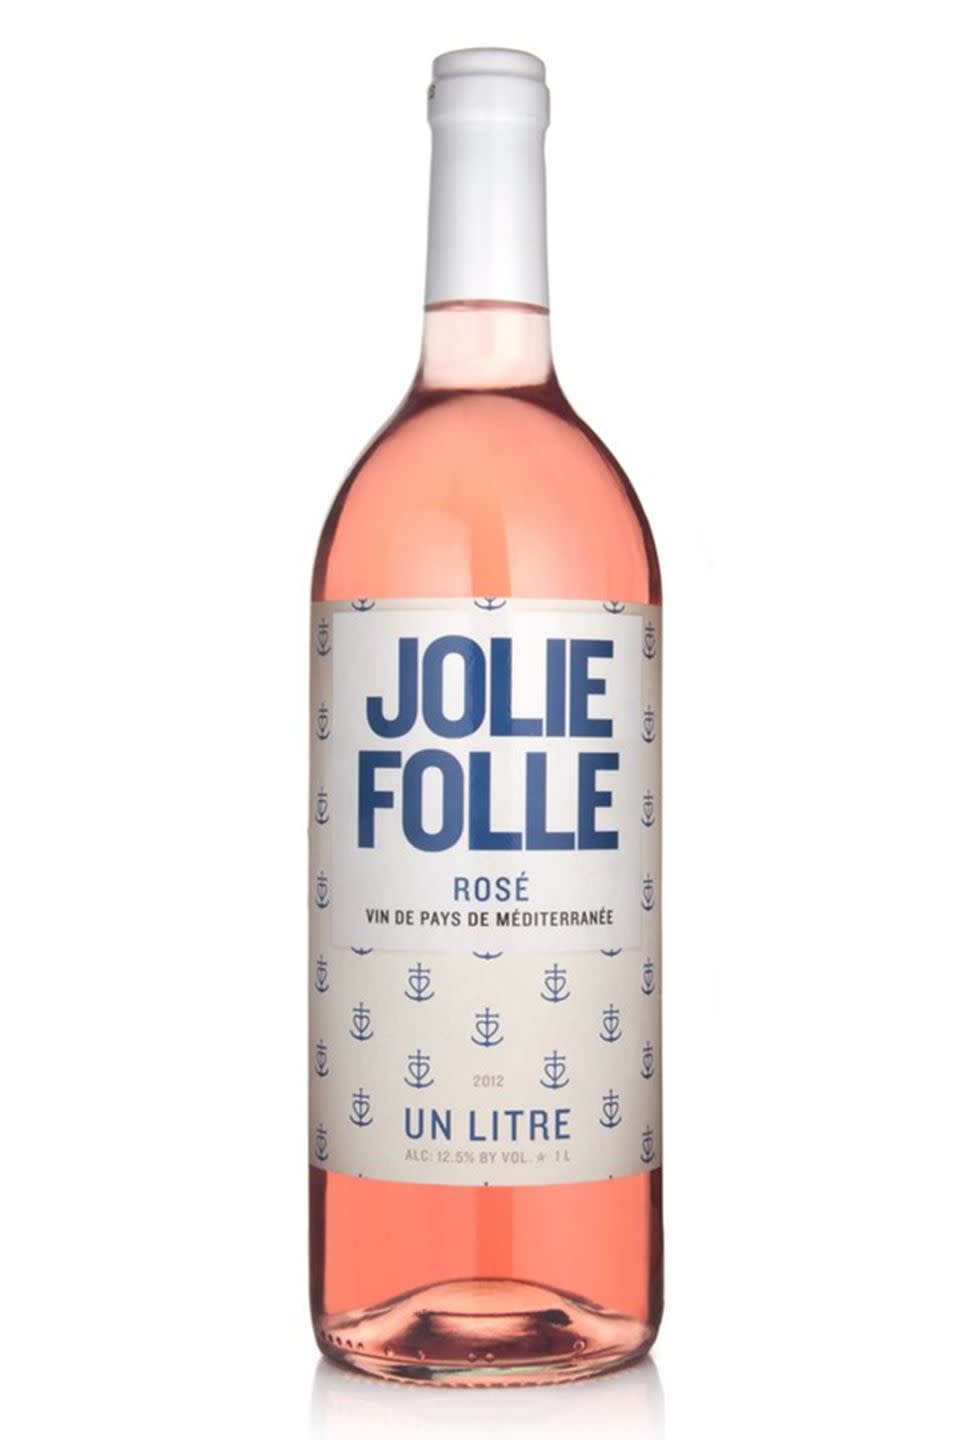 Jolie Folle Rosé 2018